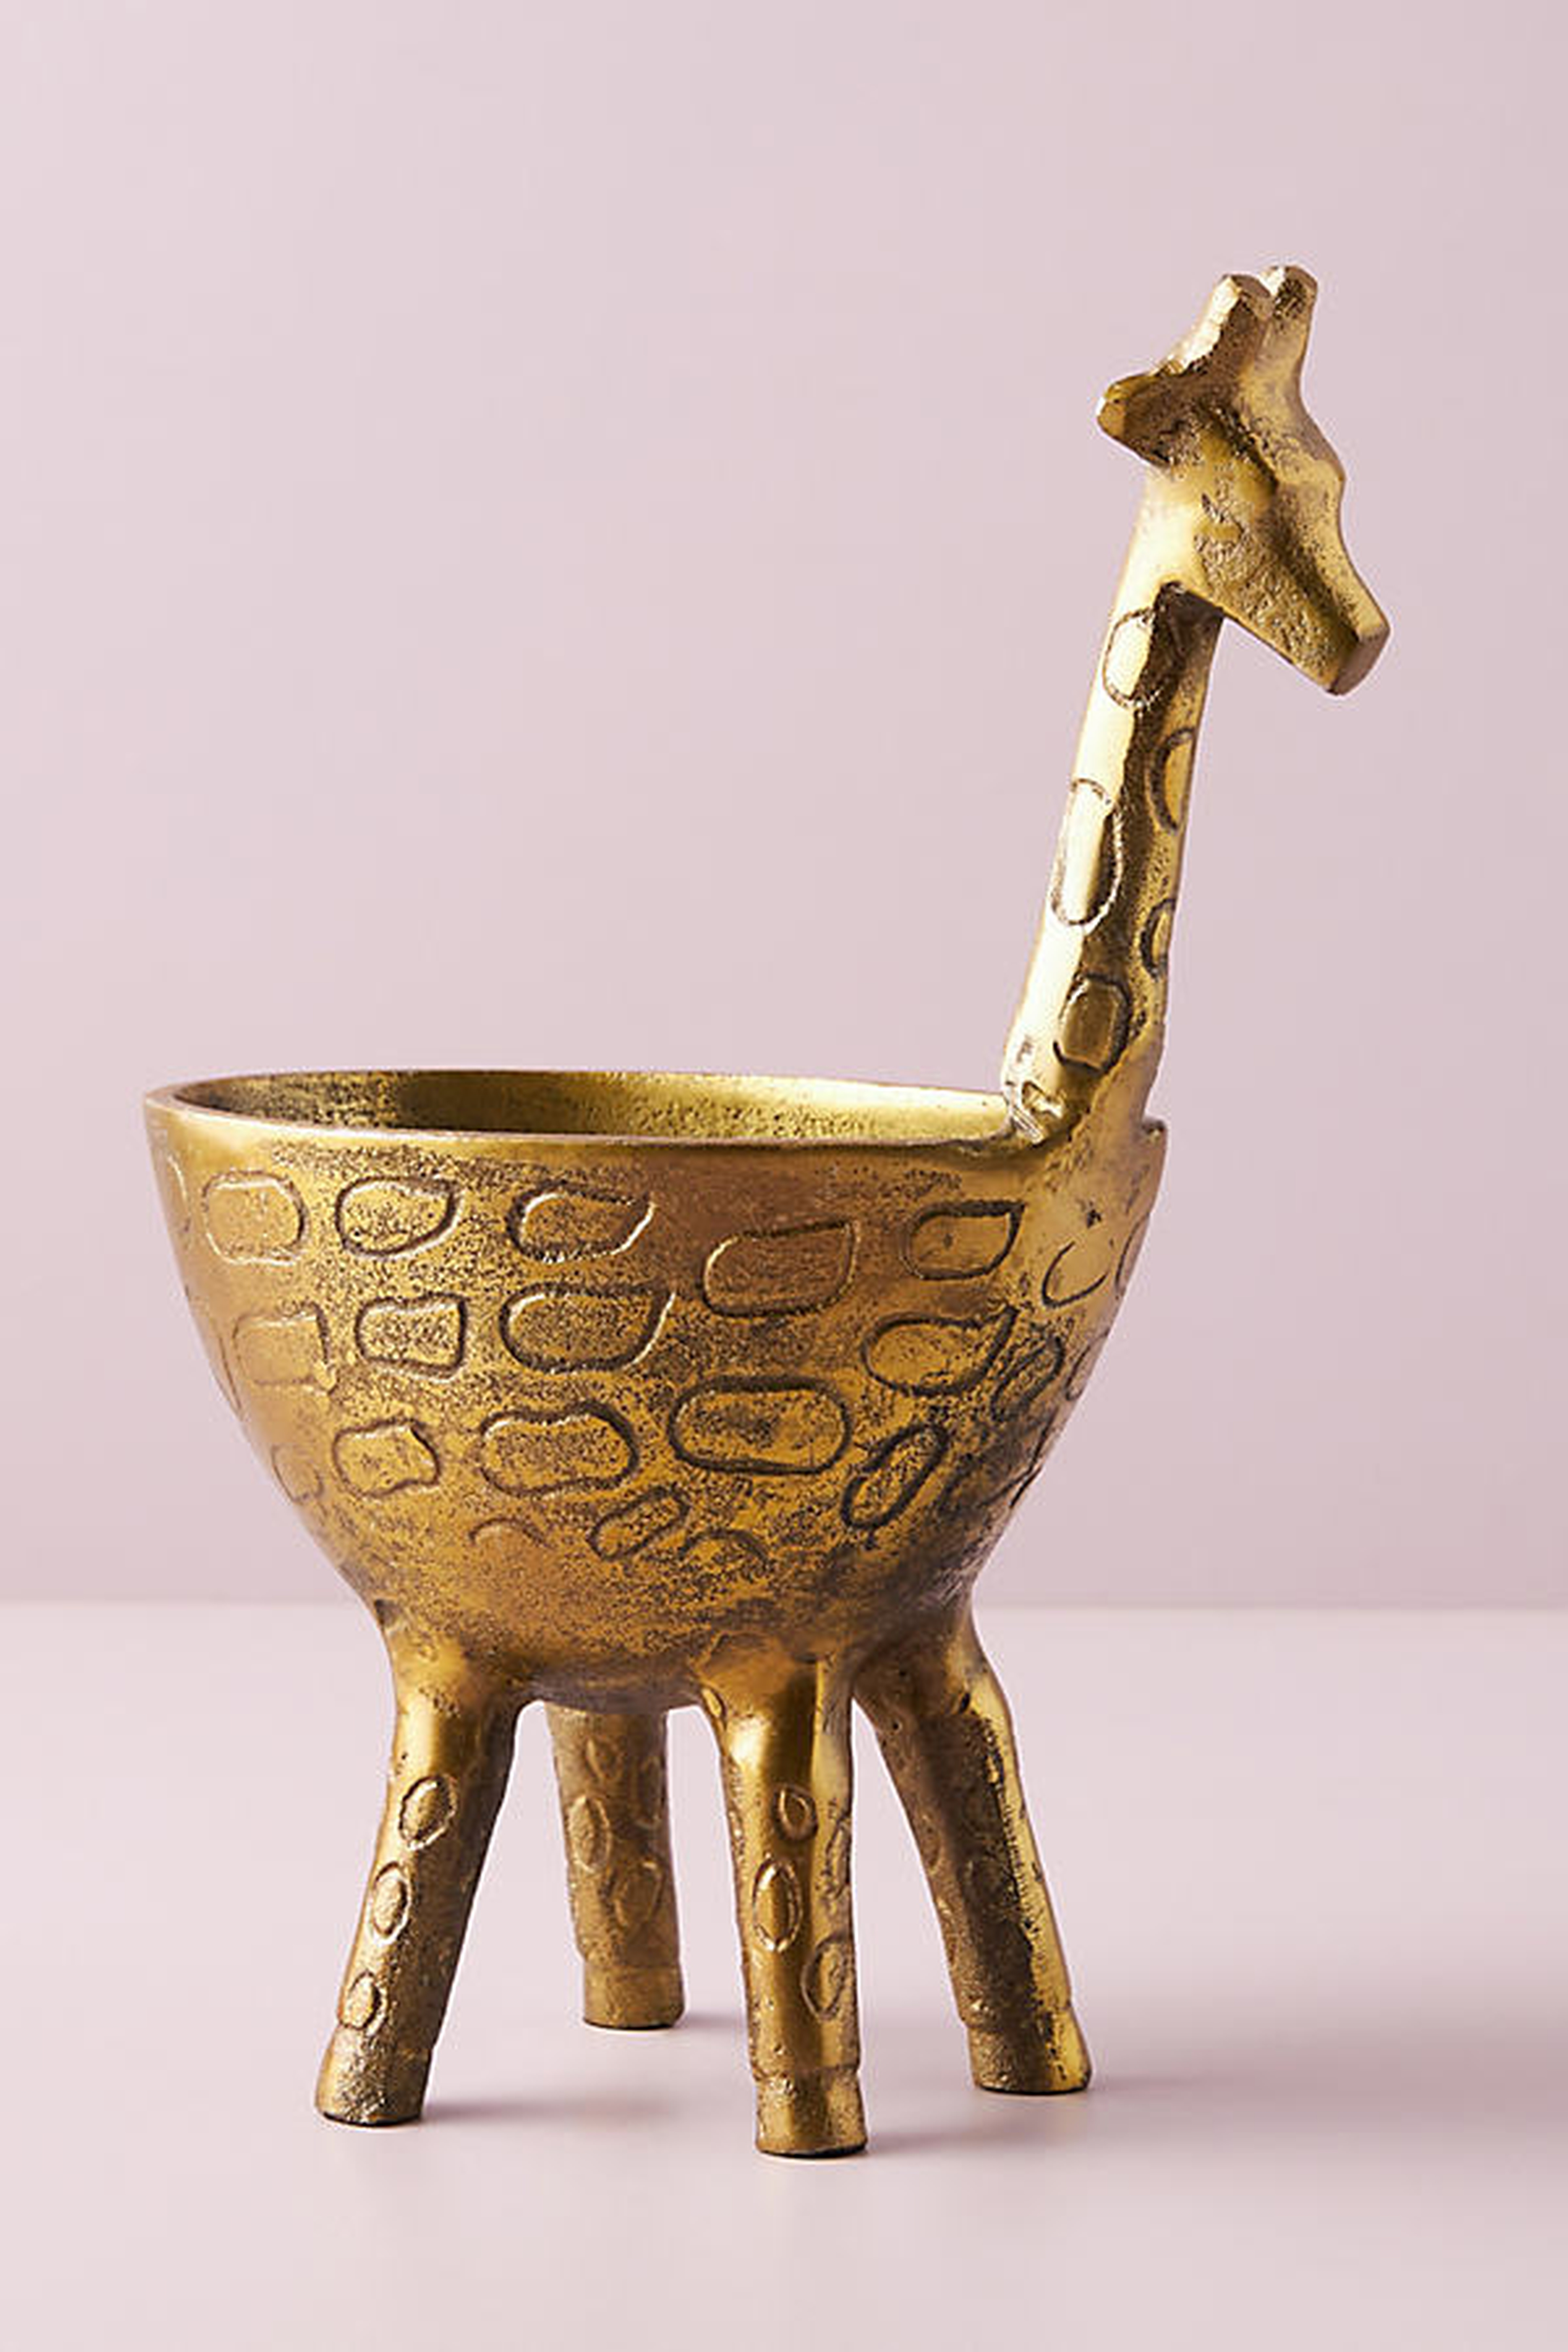 Gia Giraffe Planter By Anthropologie in Gold - Anthropologie